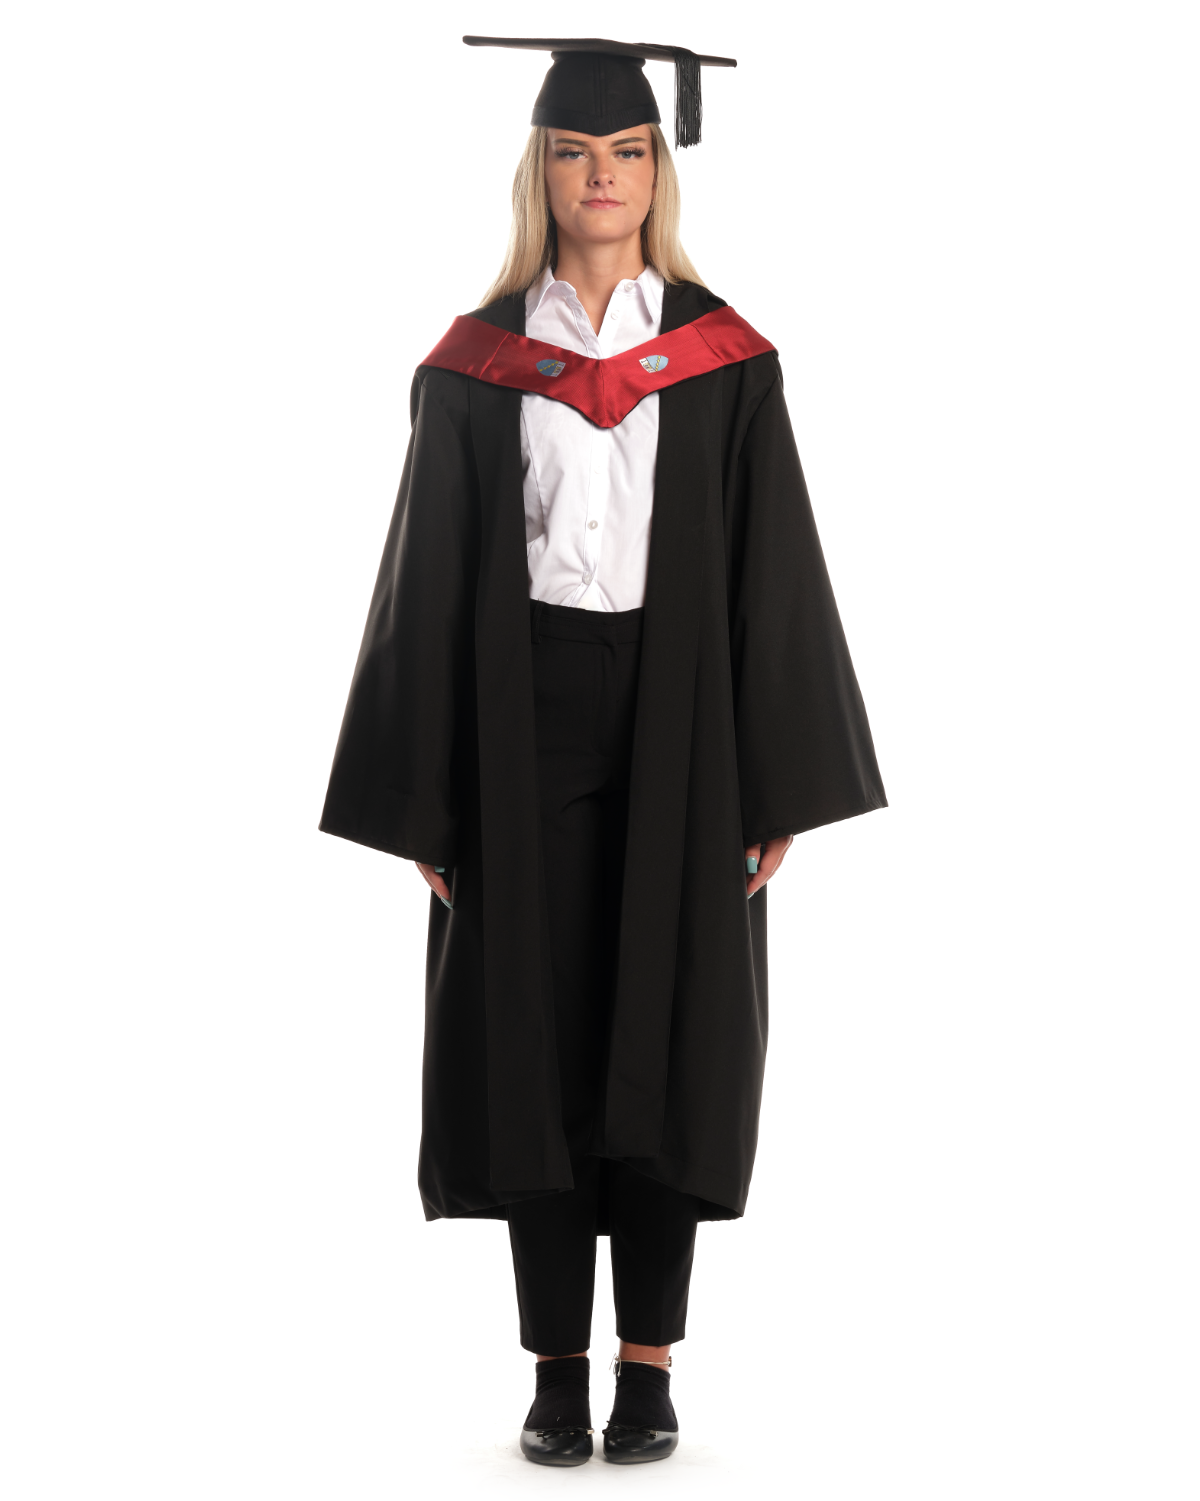 Aston University | Postgraduate Certificate & Diploma Gown, Cap and Hood Set